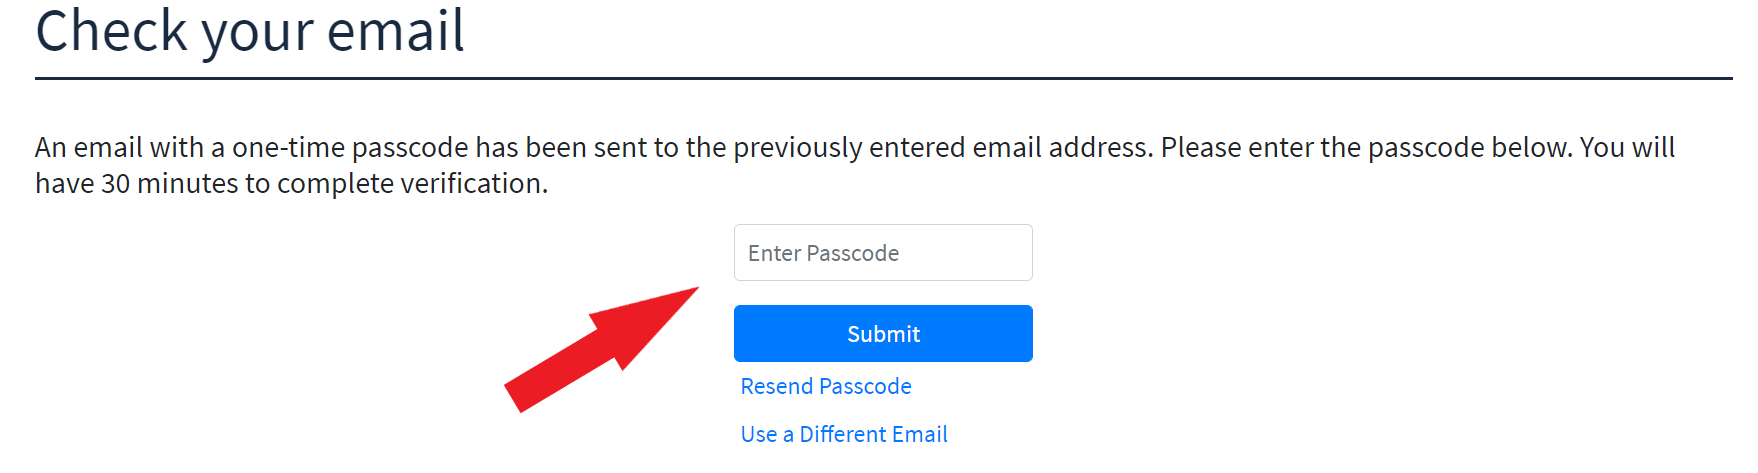 screenshot-passcode-page-florida-crash-portal 